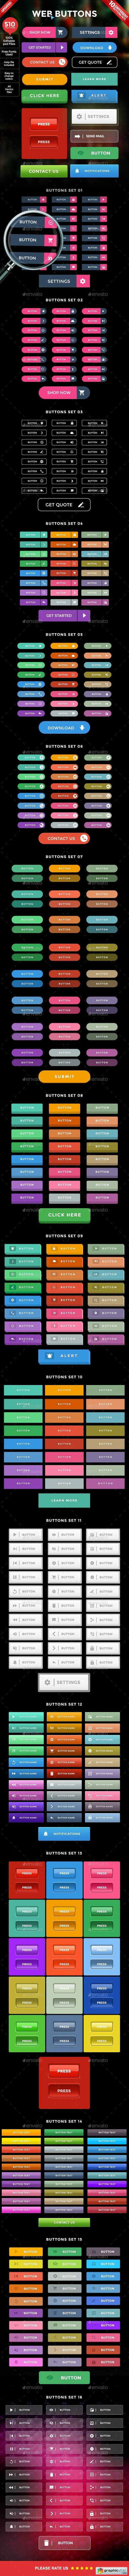 Web Buttons � 500+ Buttons